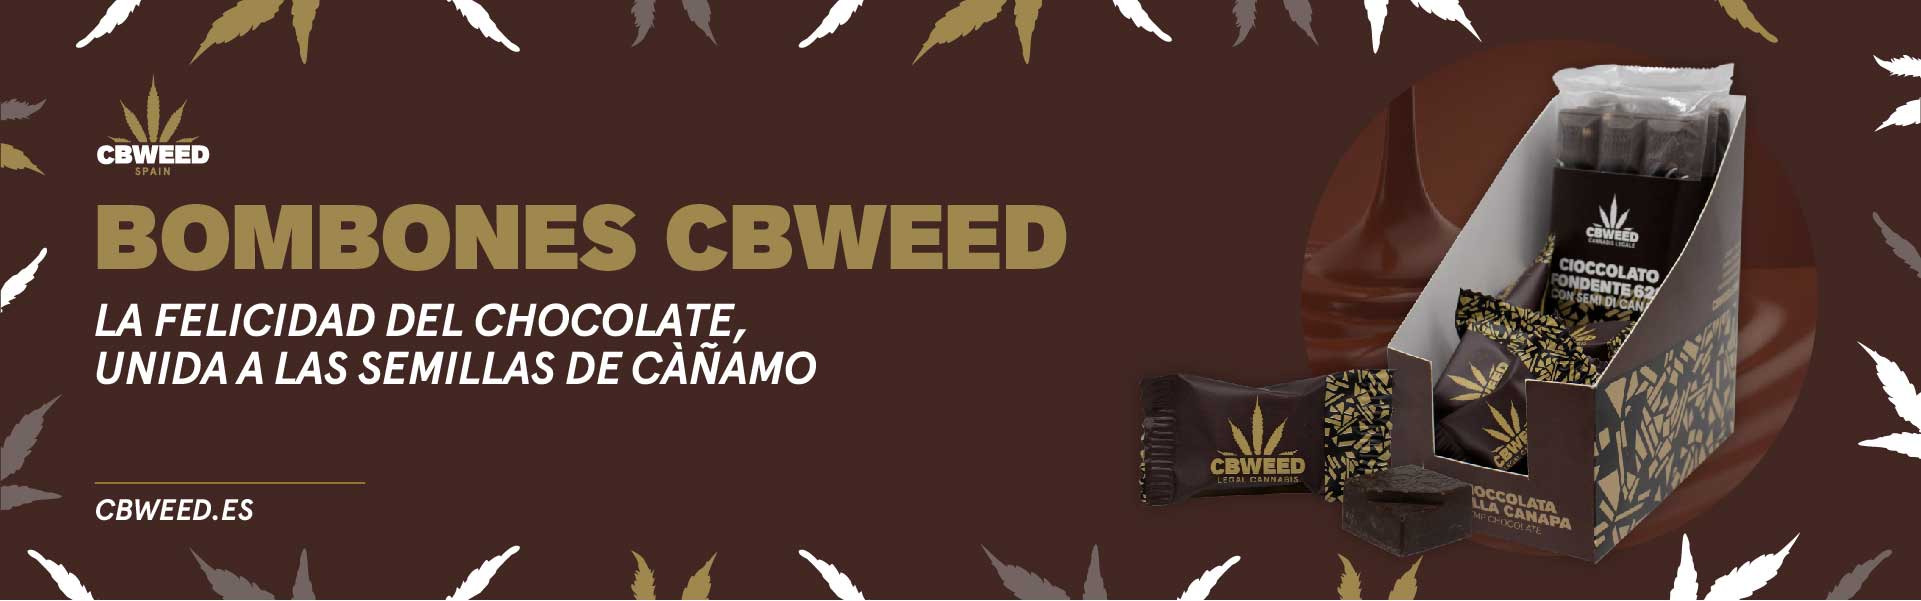 Semillas autoflorecientes feminizadas Deep Purple CBD - CBWEED